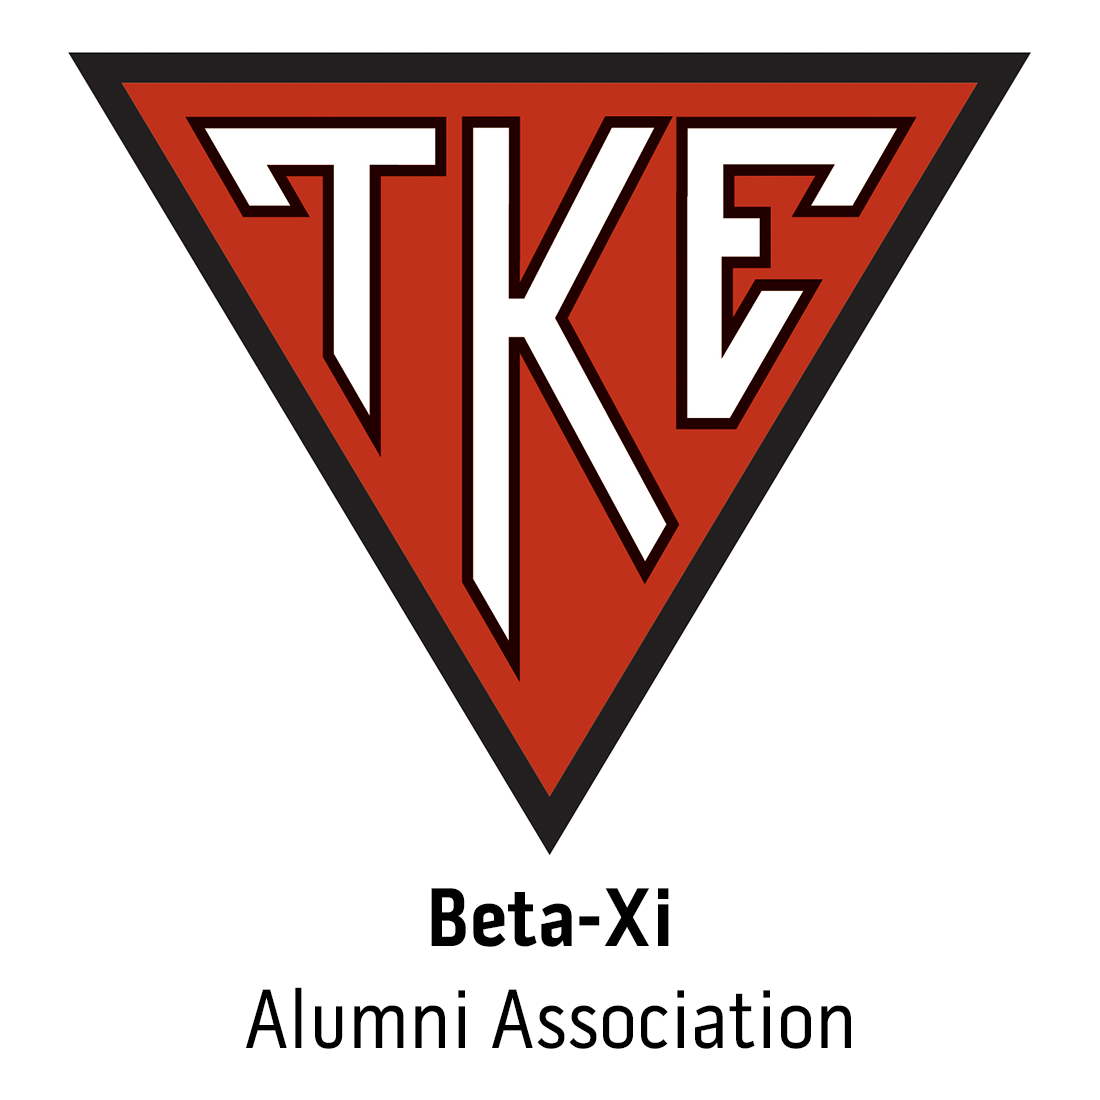 Beta-Xi Alumni Association for Arizona State University.